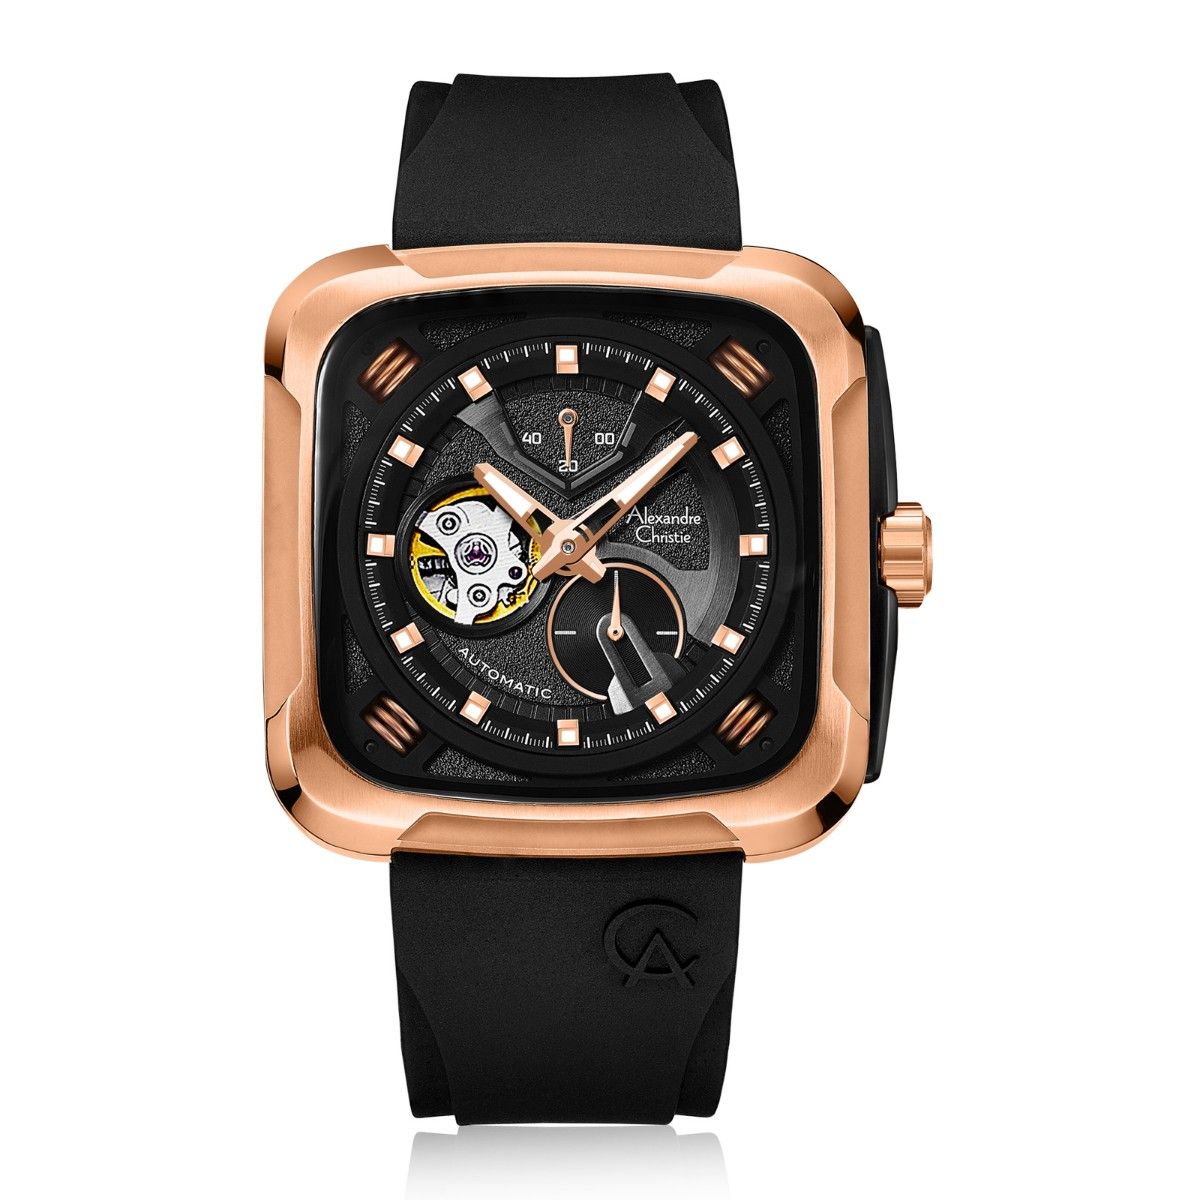 Alexandre Christie 6577 MAR Automatic Watch For Men - Black